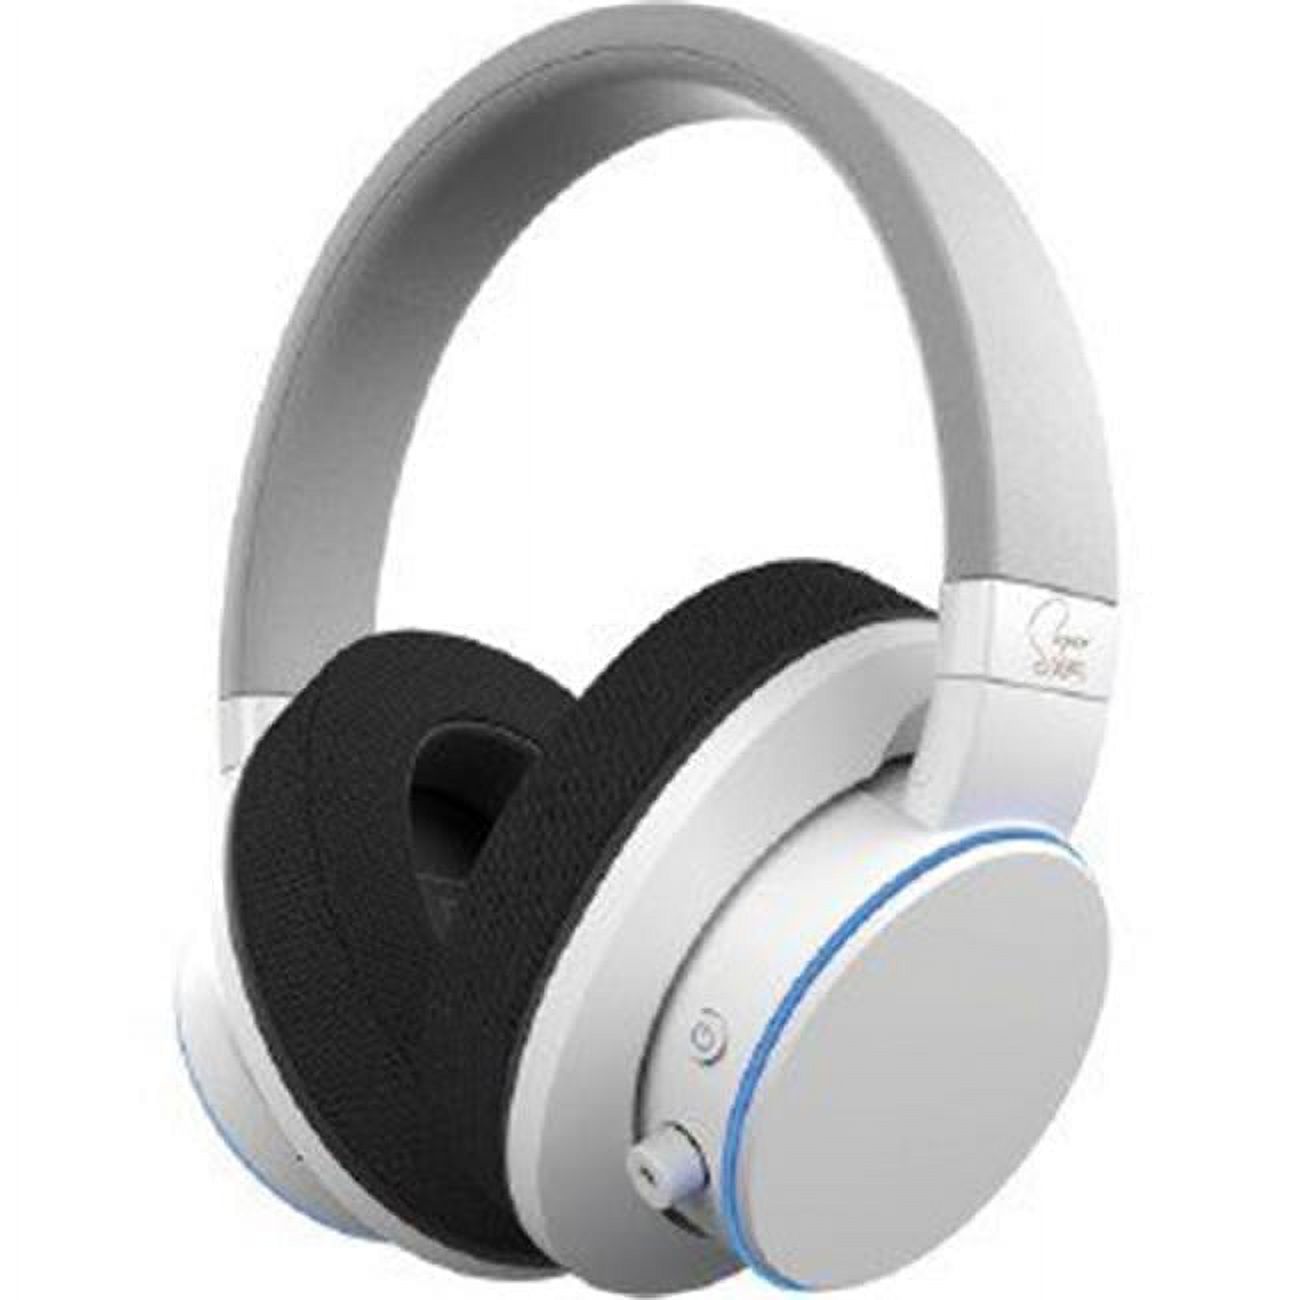 Creative Labs 51EF0810AA000 Sxfi Air Headset - image 1 of 4